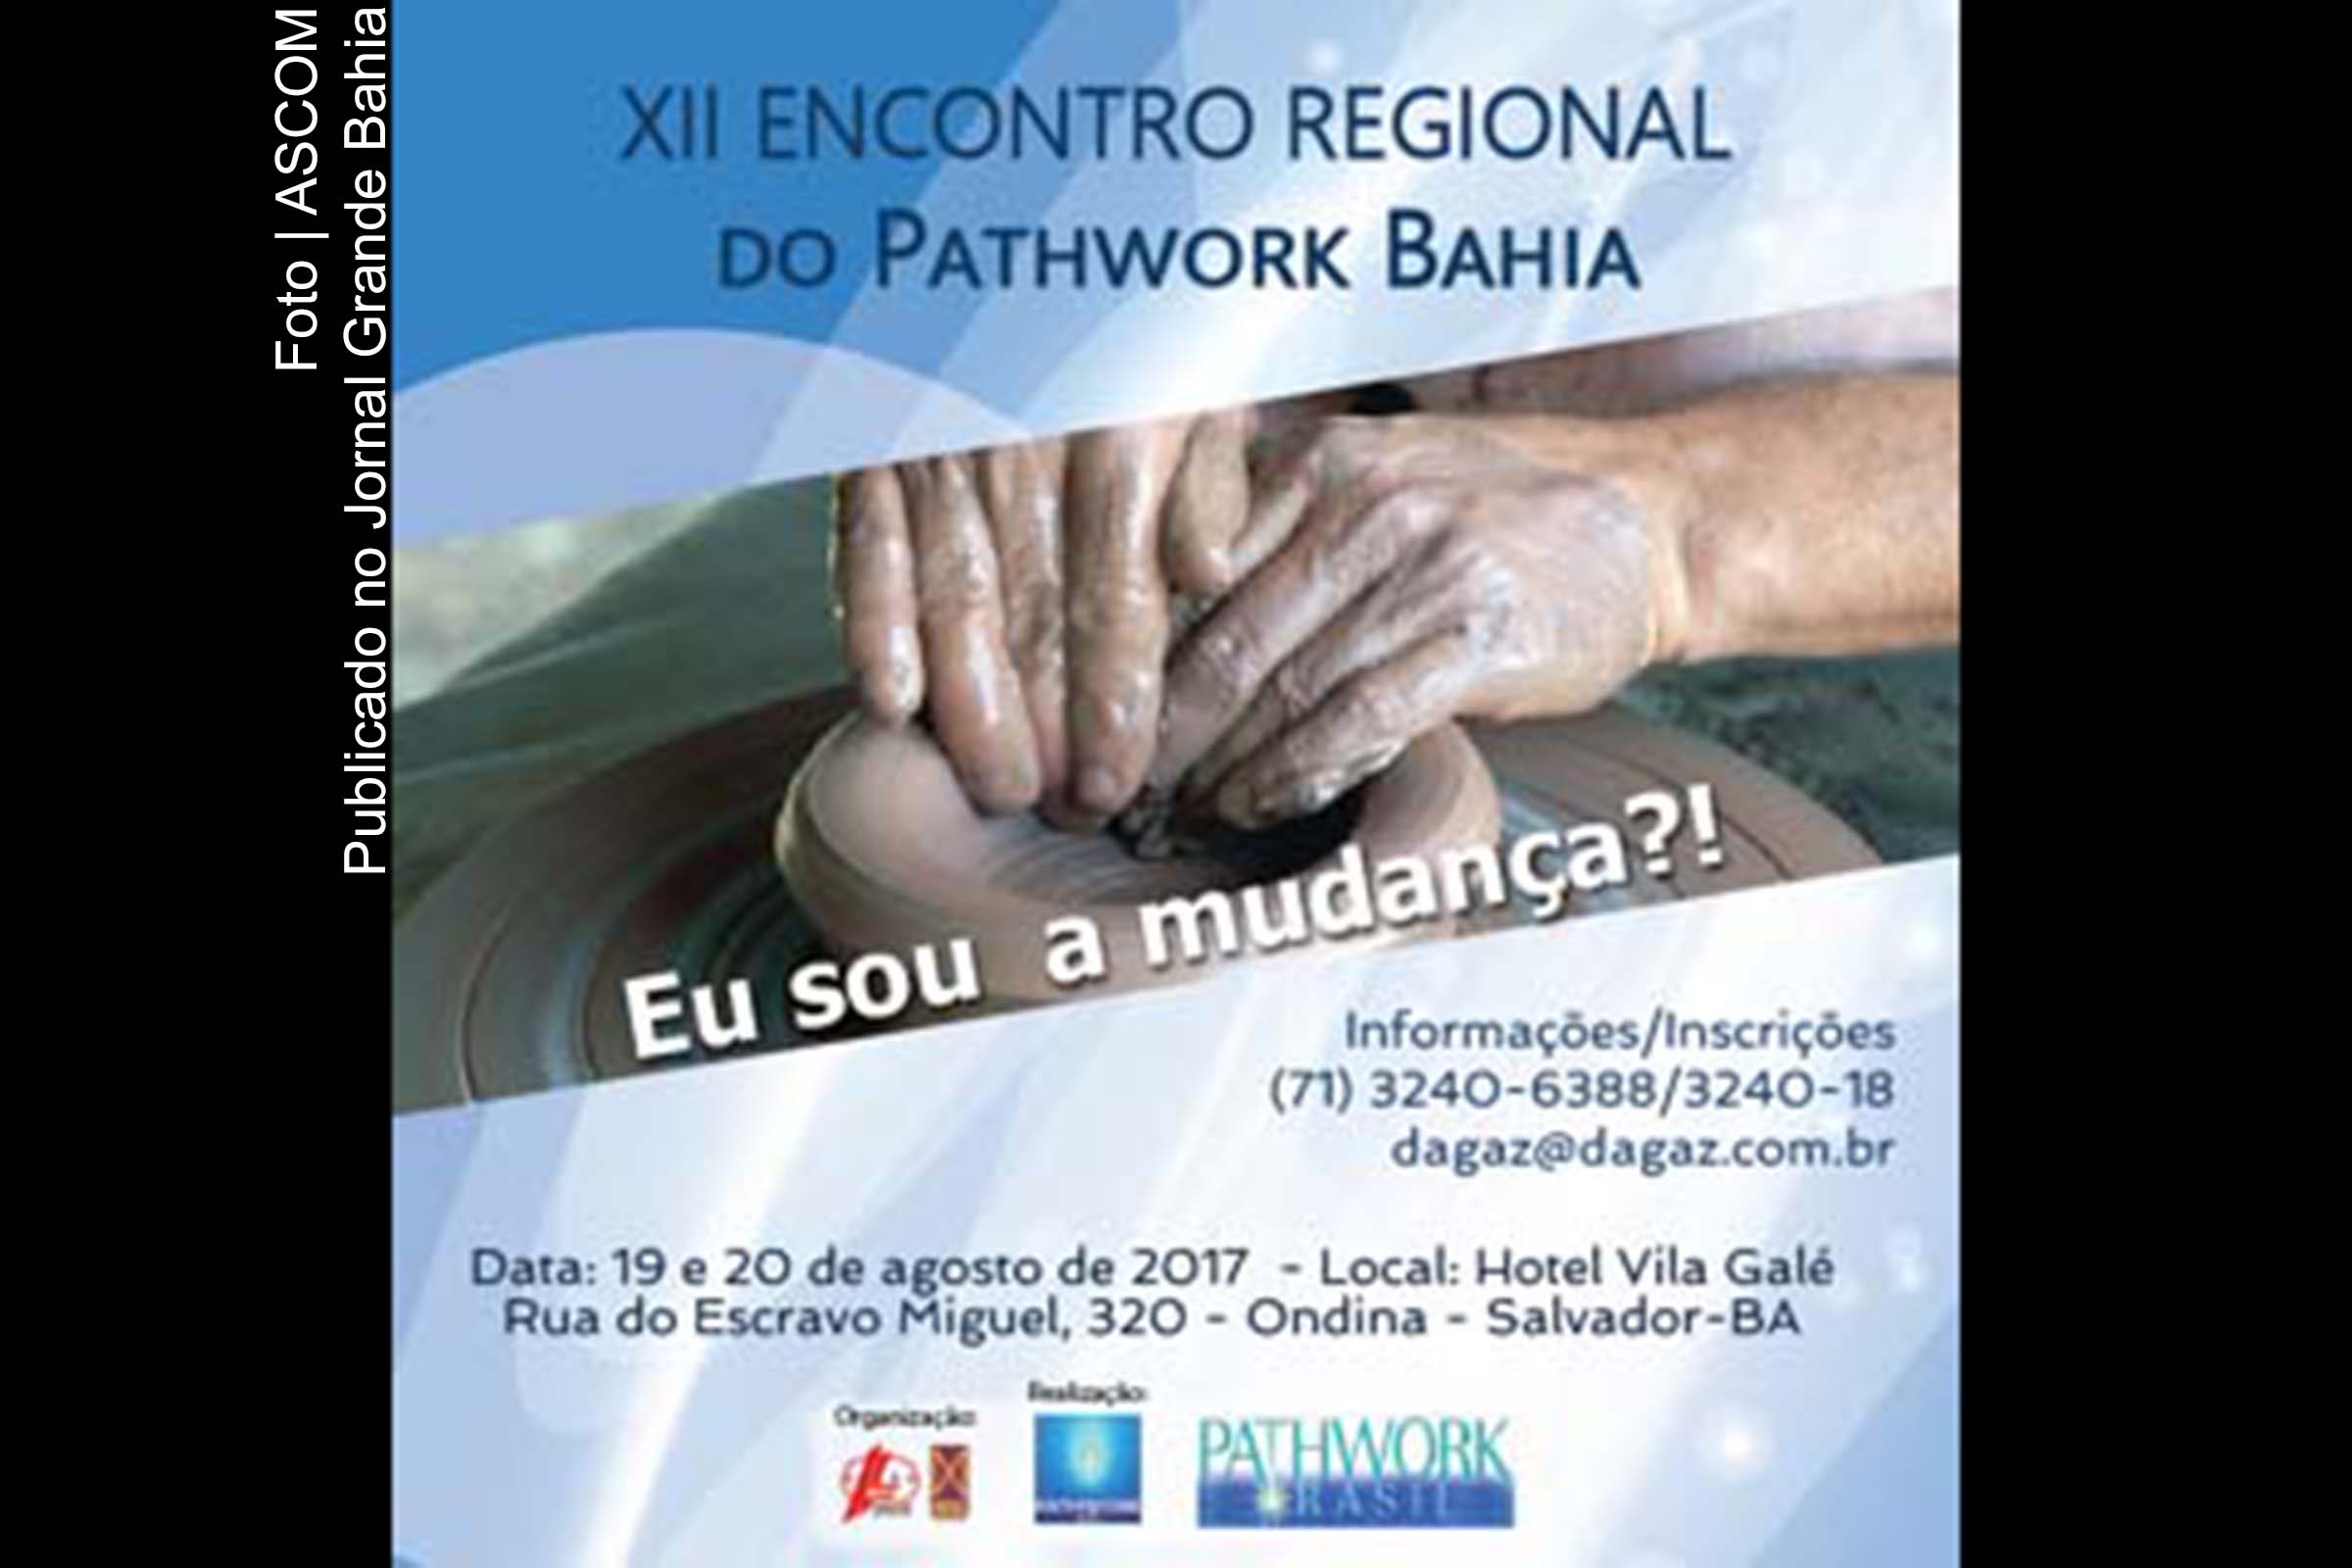 Cartaz anuncia XII Encontro Regional de Pathwork Bahia.